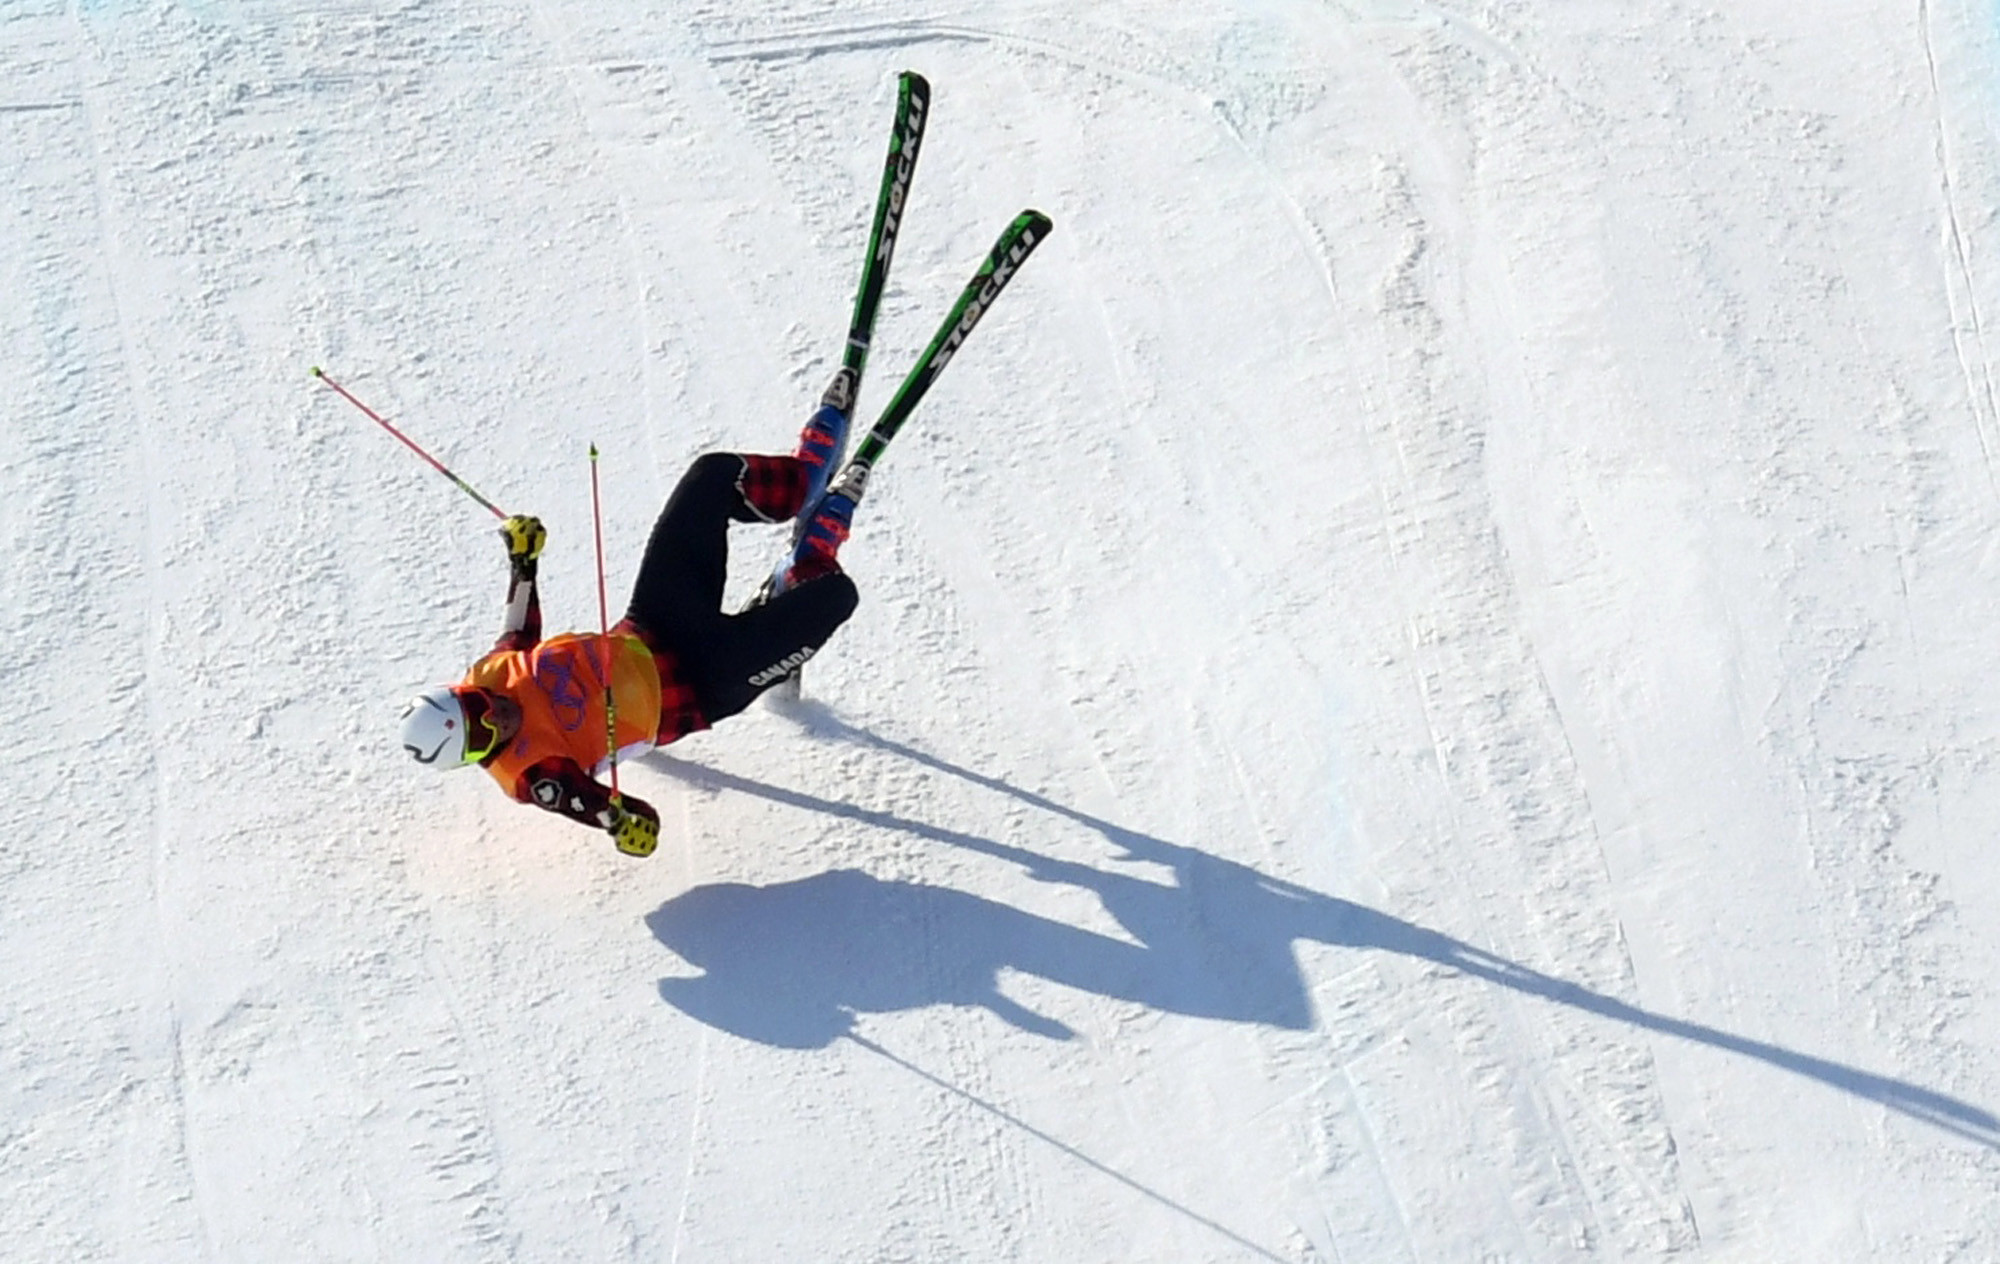 Olympic skier breaks pelvis in horrifying 100-foot fall